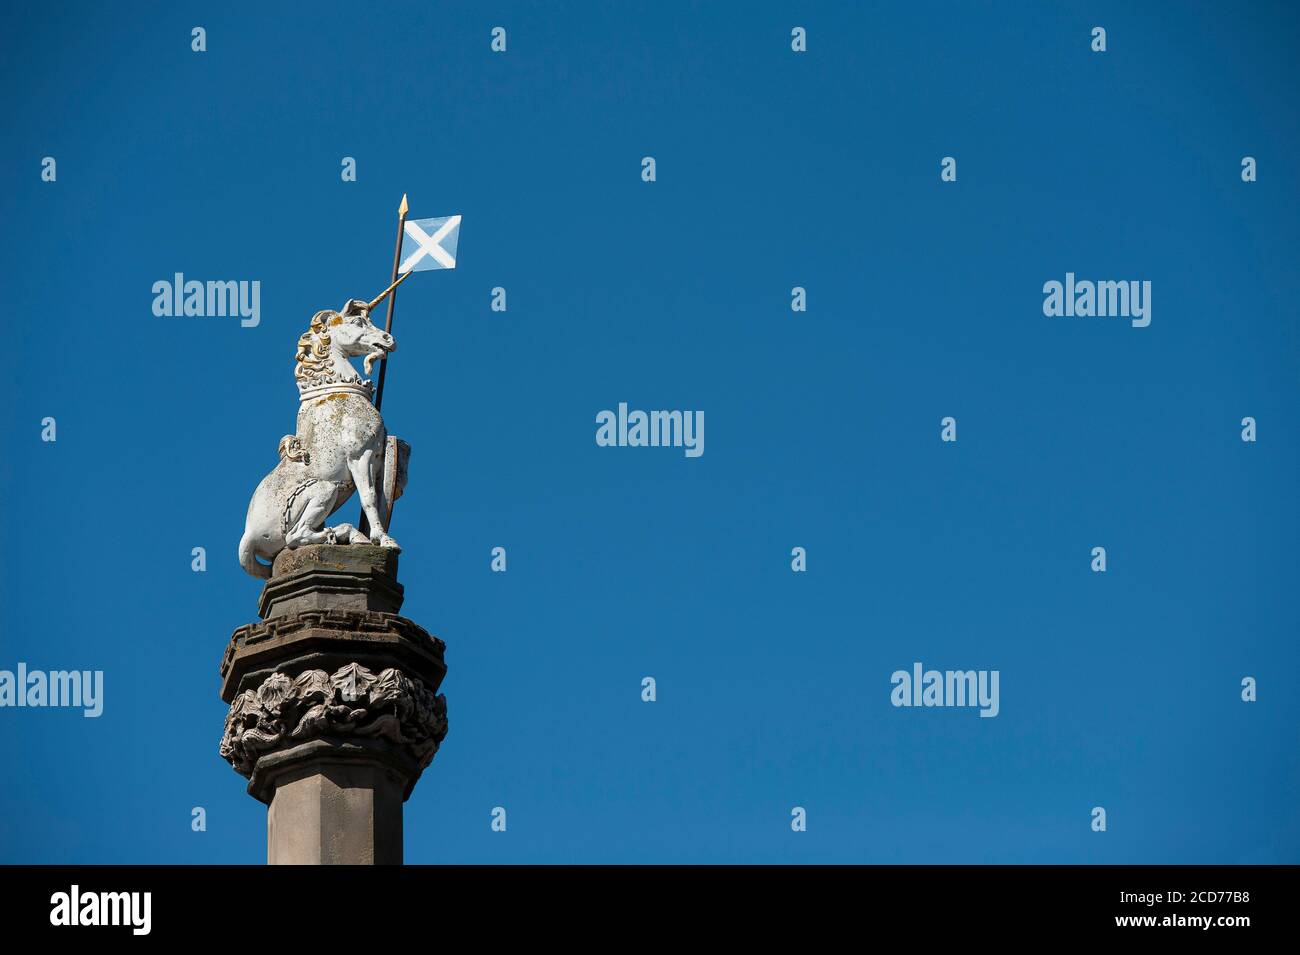 A statue of a unicorn, the national animal of Scotland, in the city of Edinburgh, Scotland. Stock Photo